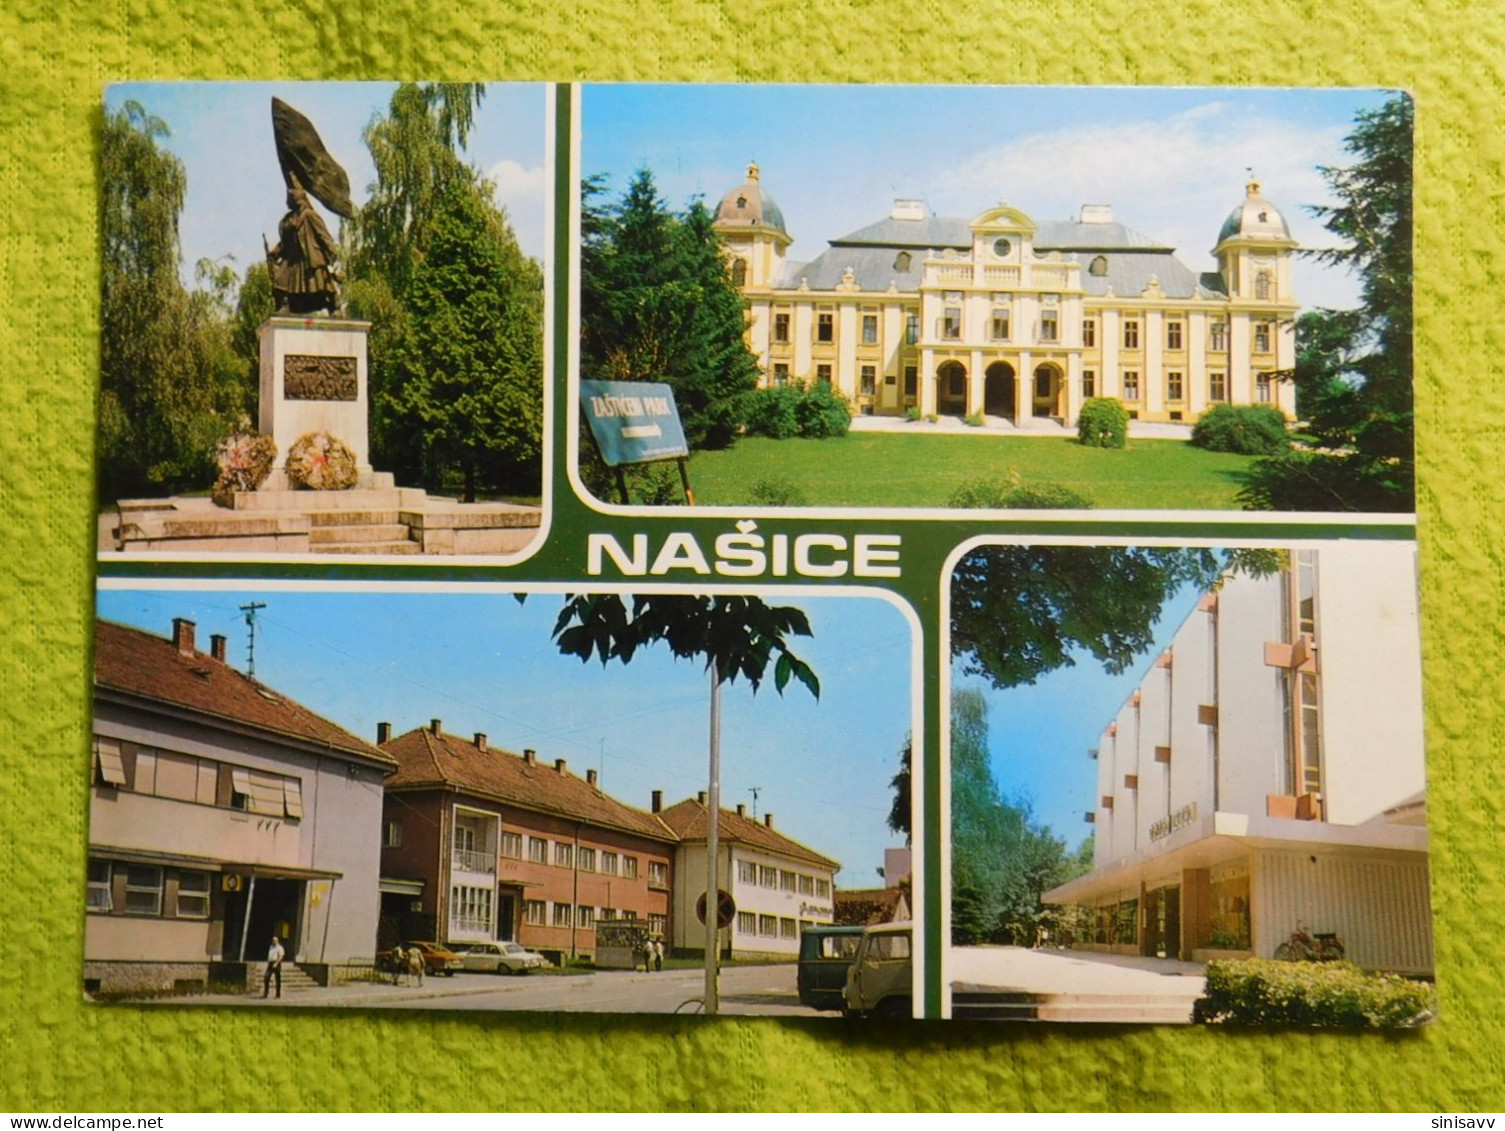 Našice - Croacia